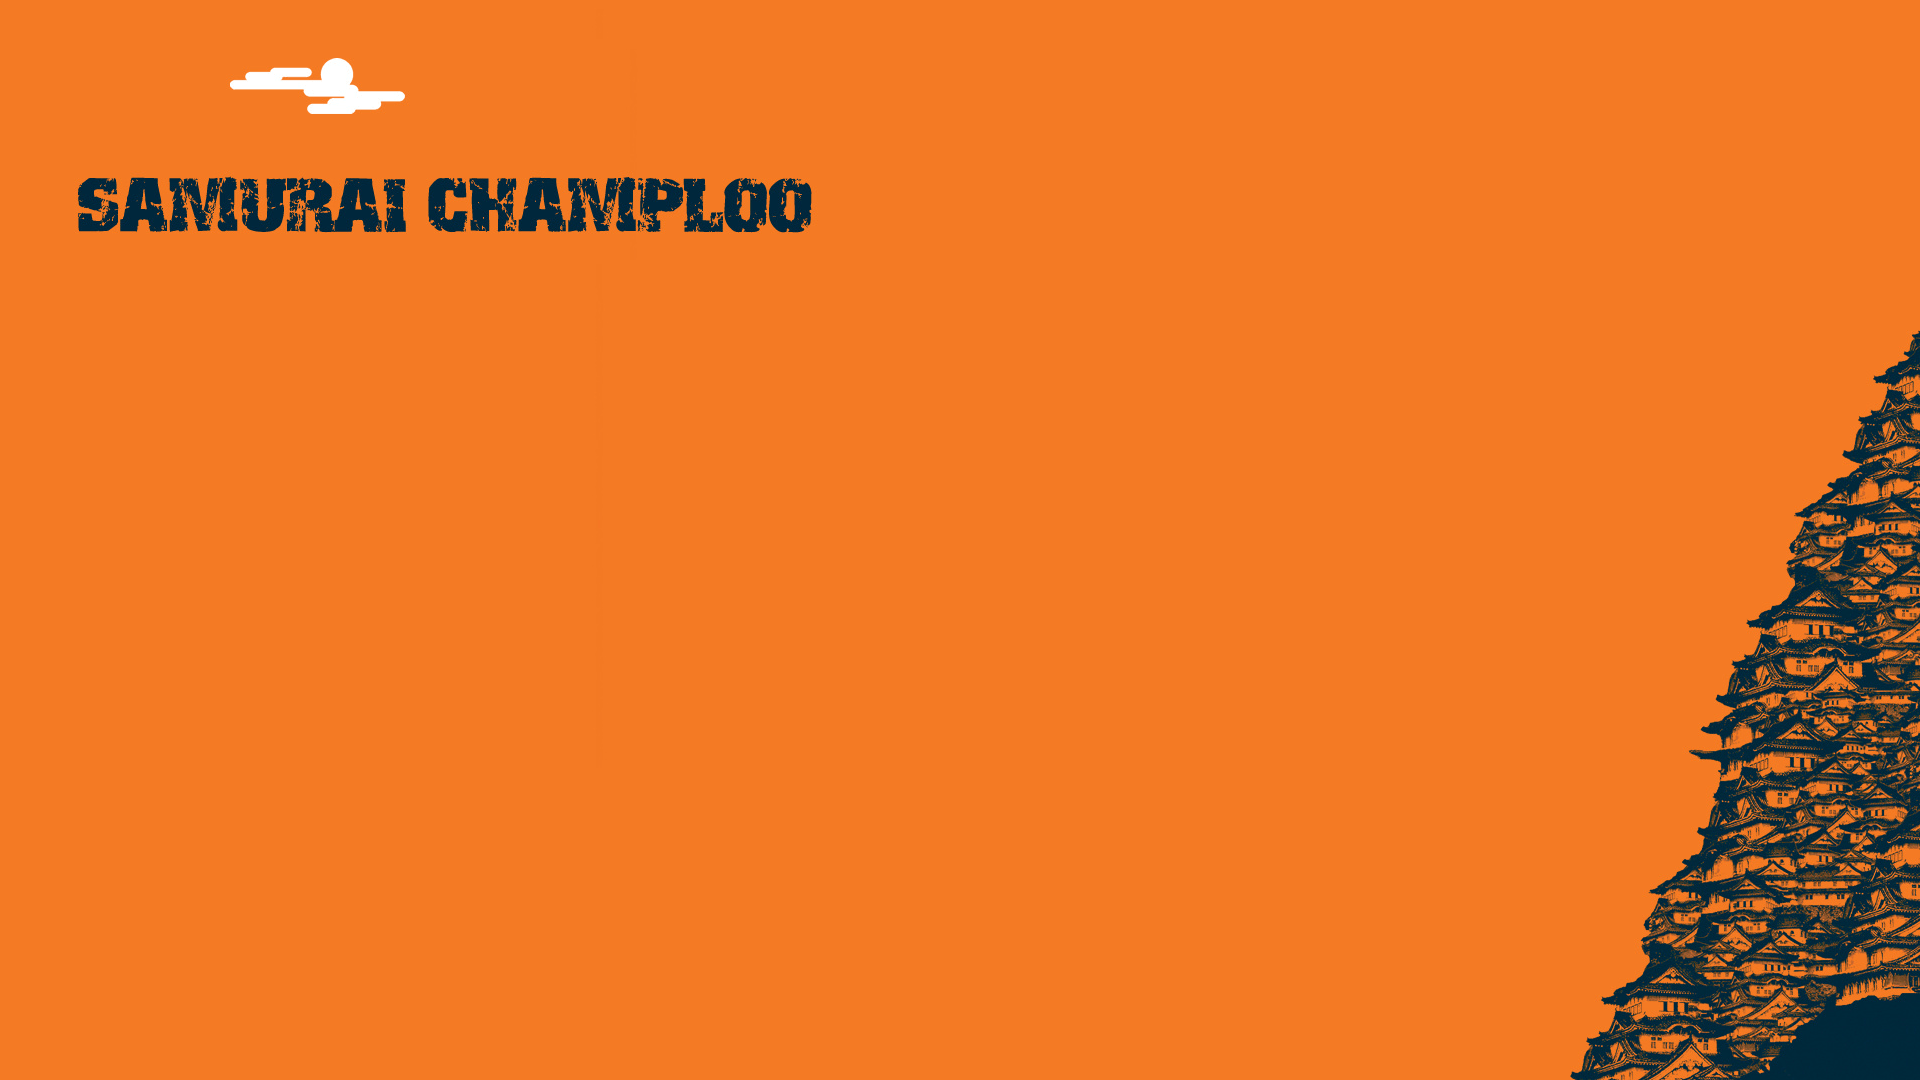 1920x1080 Samurai Champloo hình nền (x Post R hình nền): SamuraiChamploo